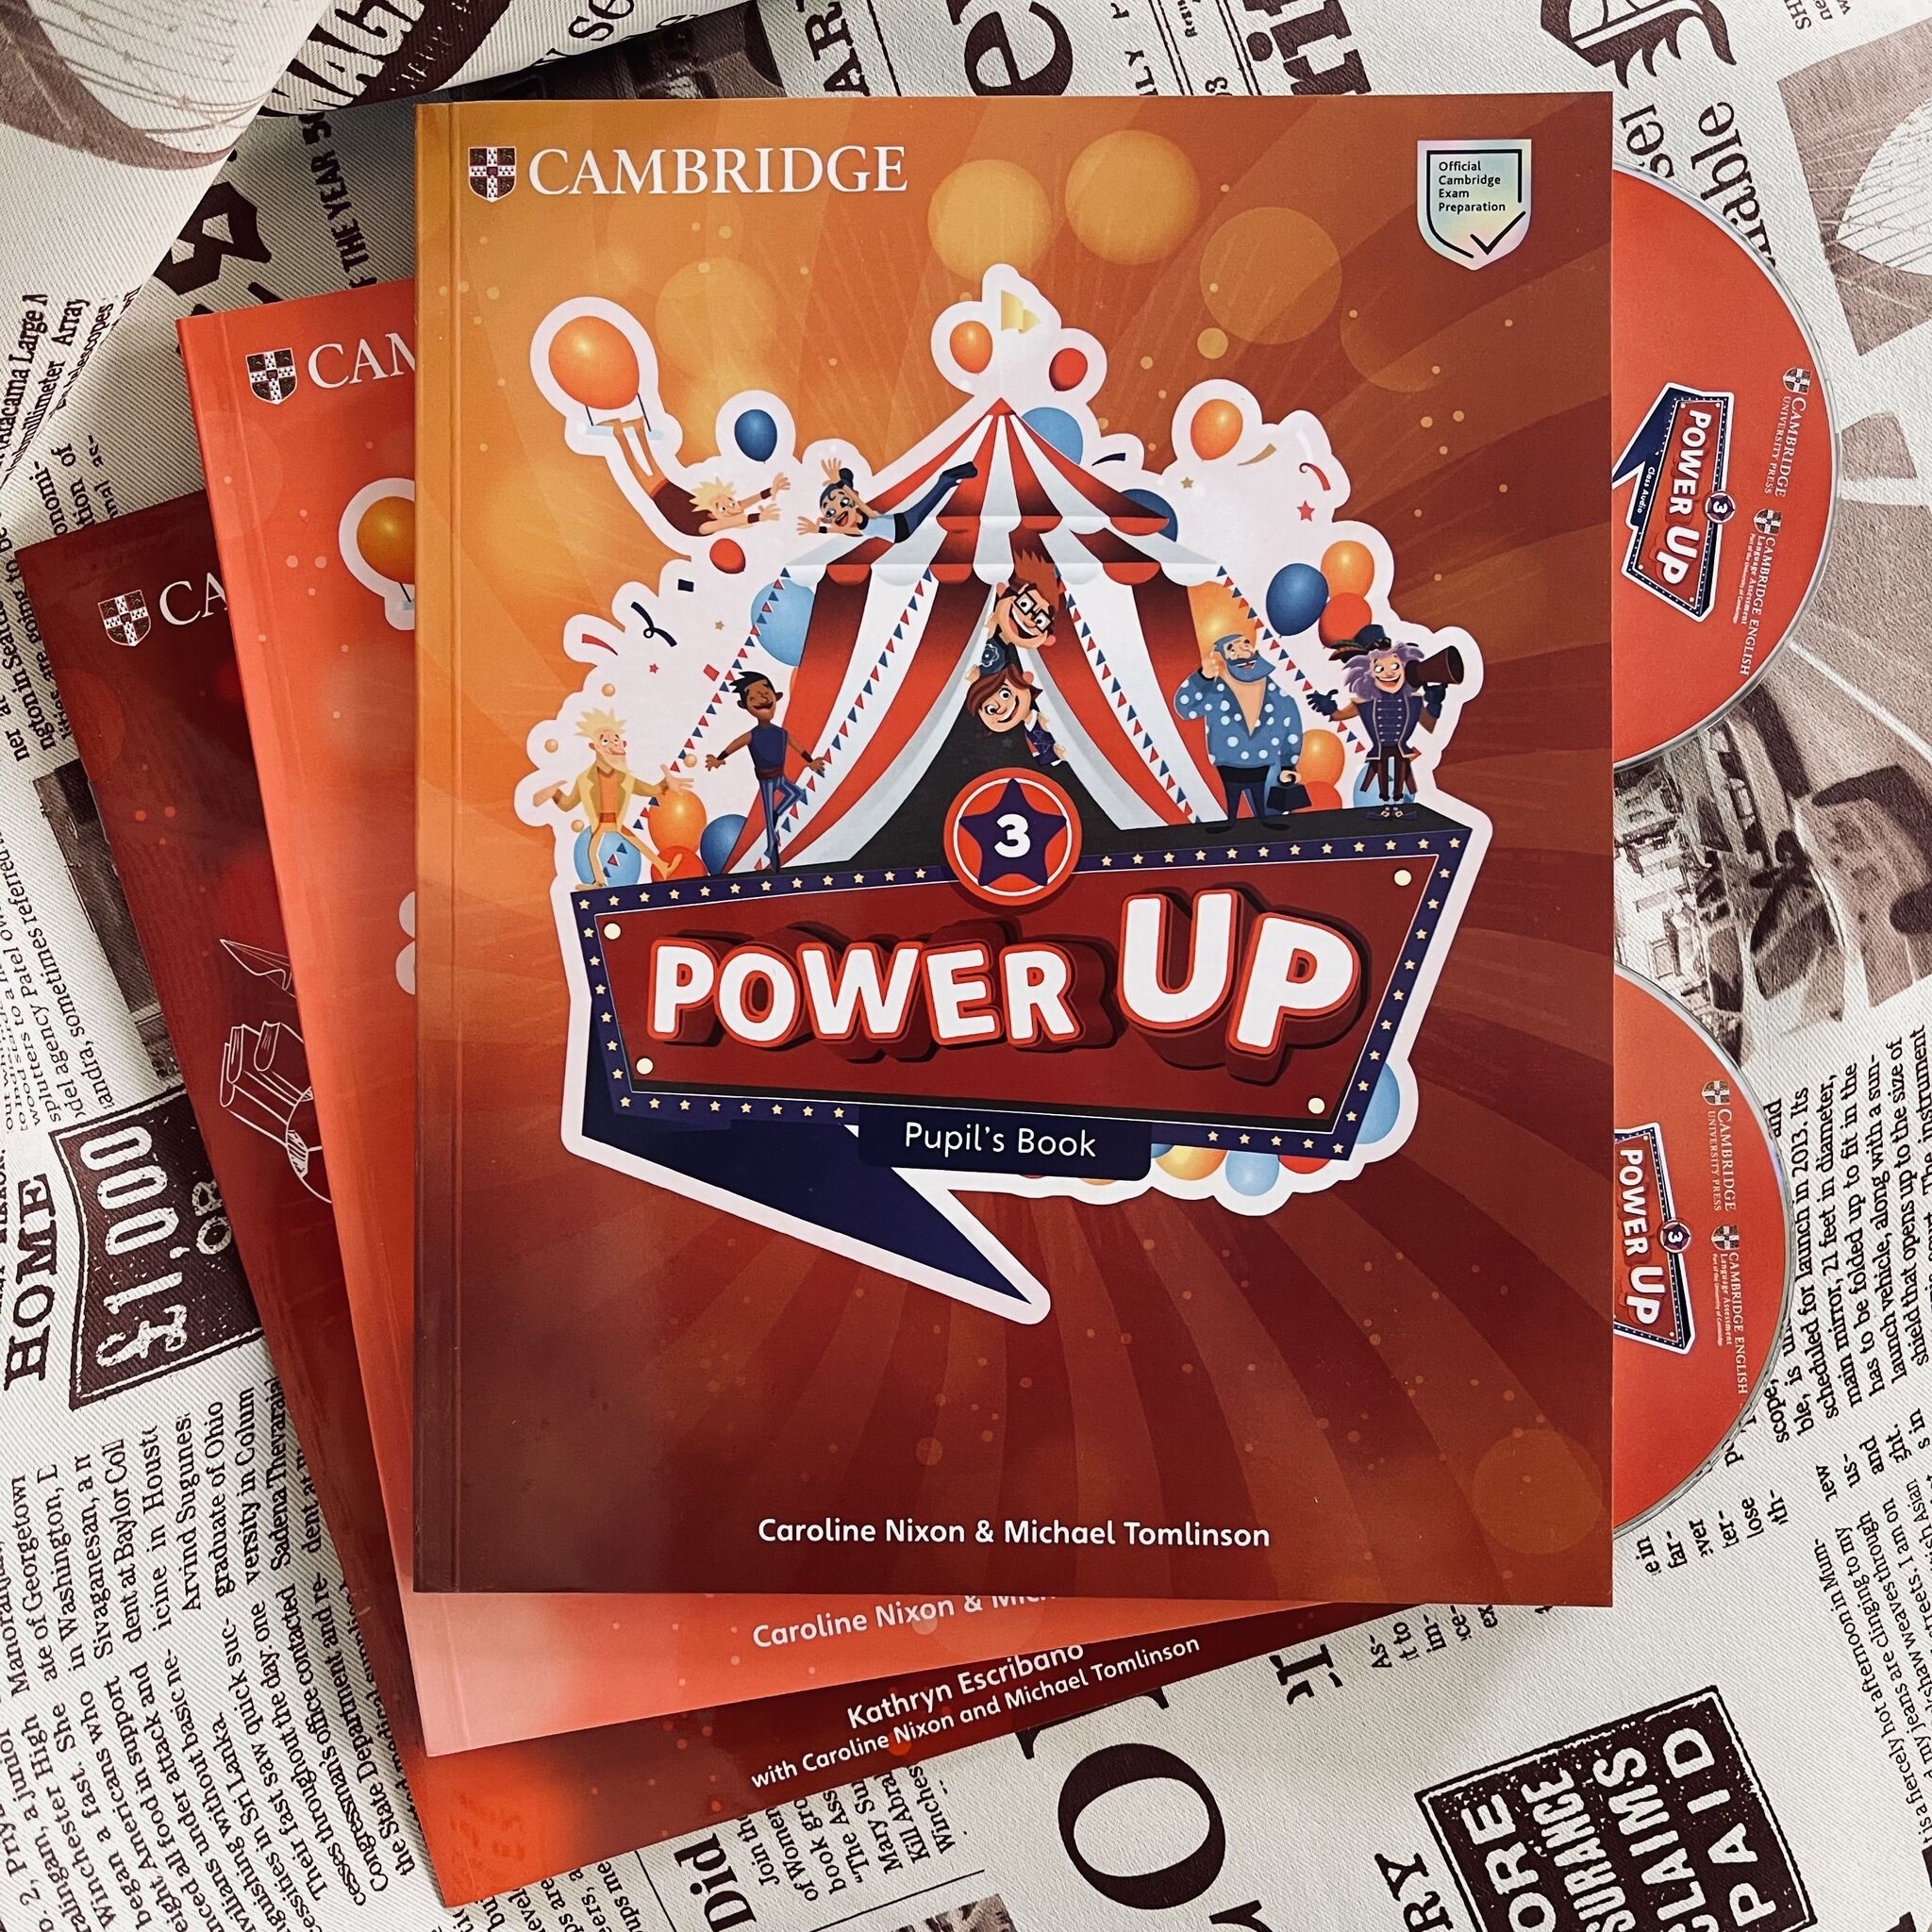 Power book s. Cambridge University Press books for Kids Power up.